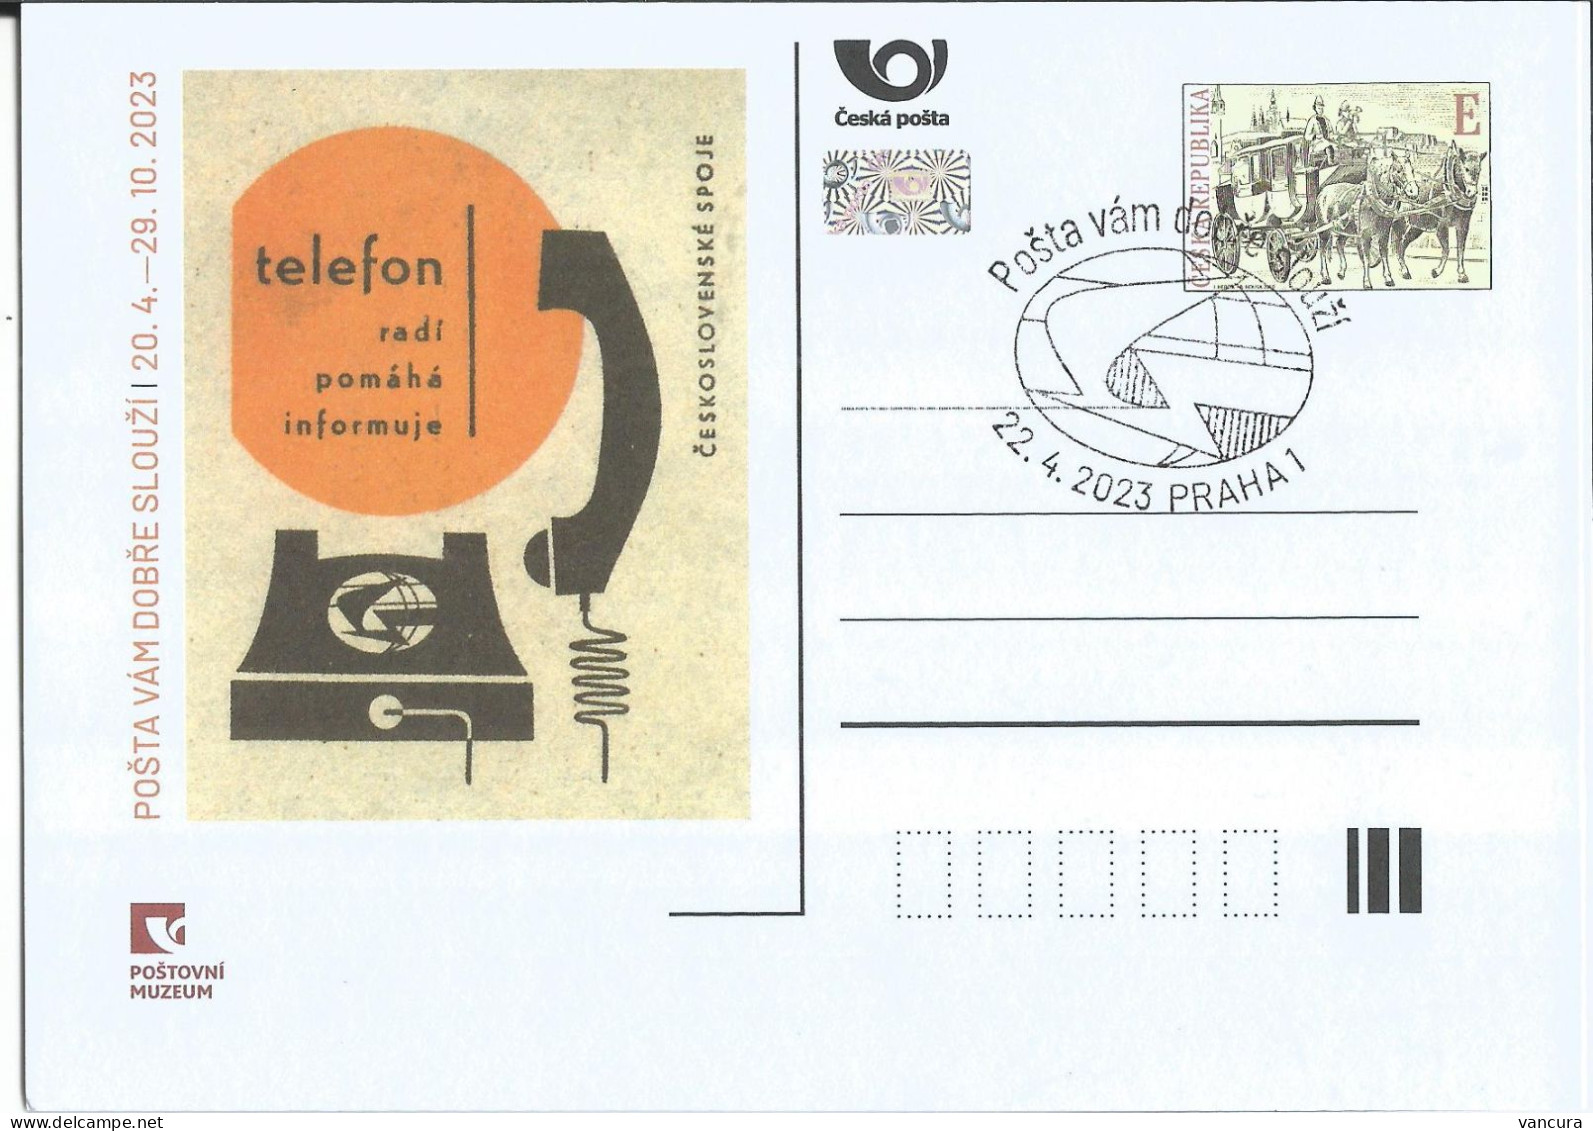 CDV PM 132 Czech Republic Post Serves You Well 2023 - Postcards